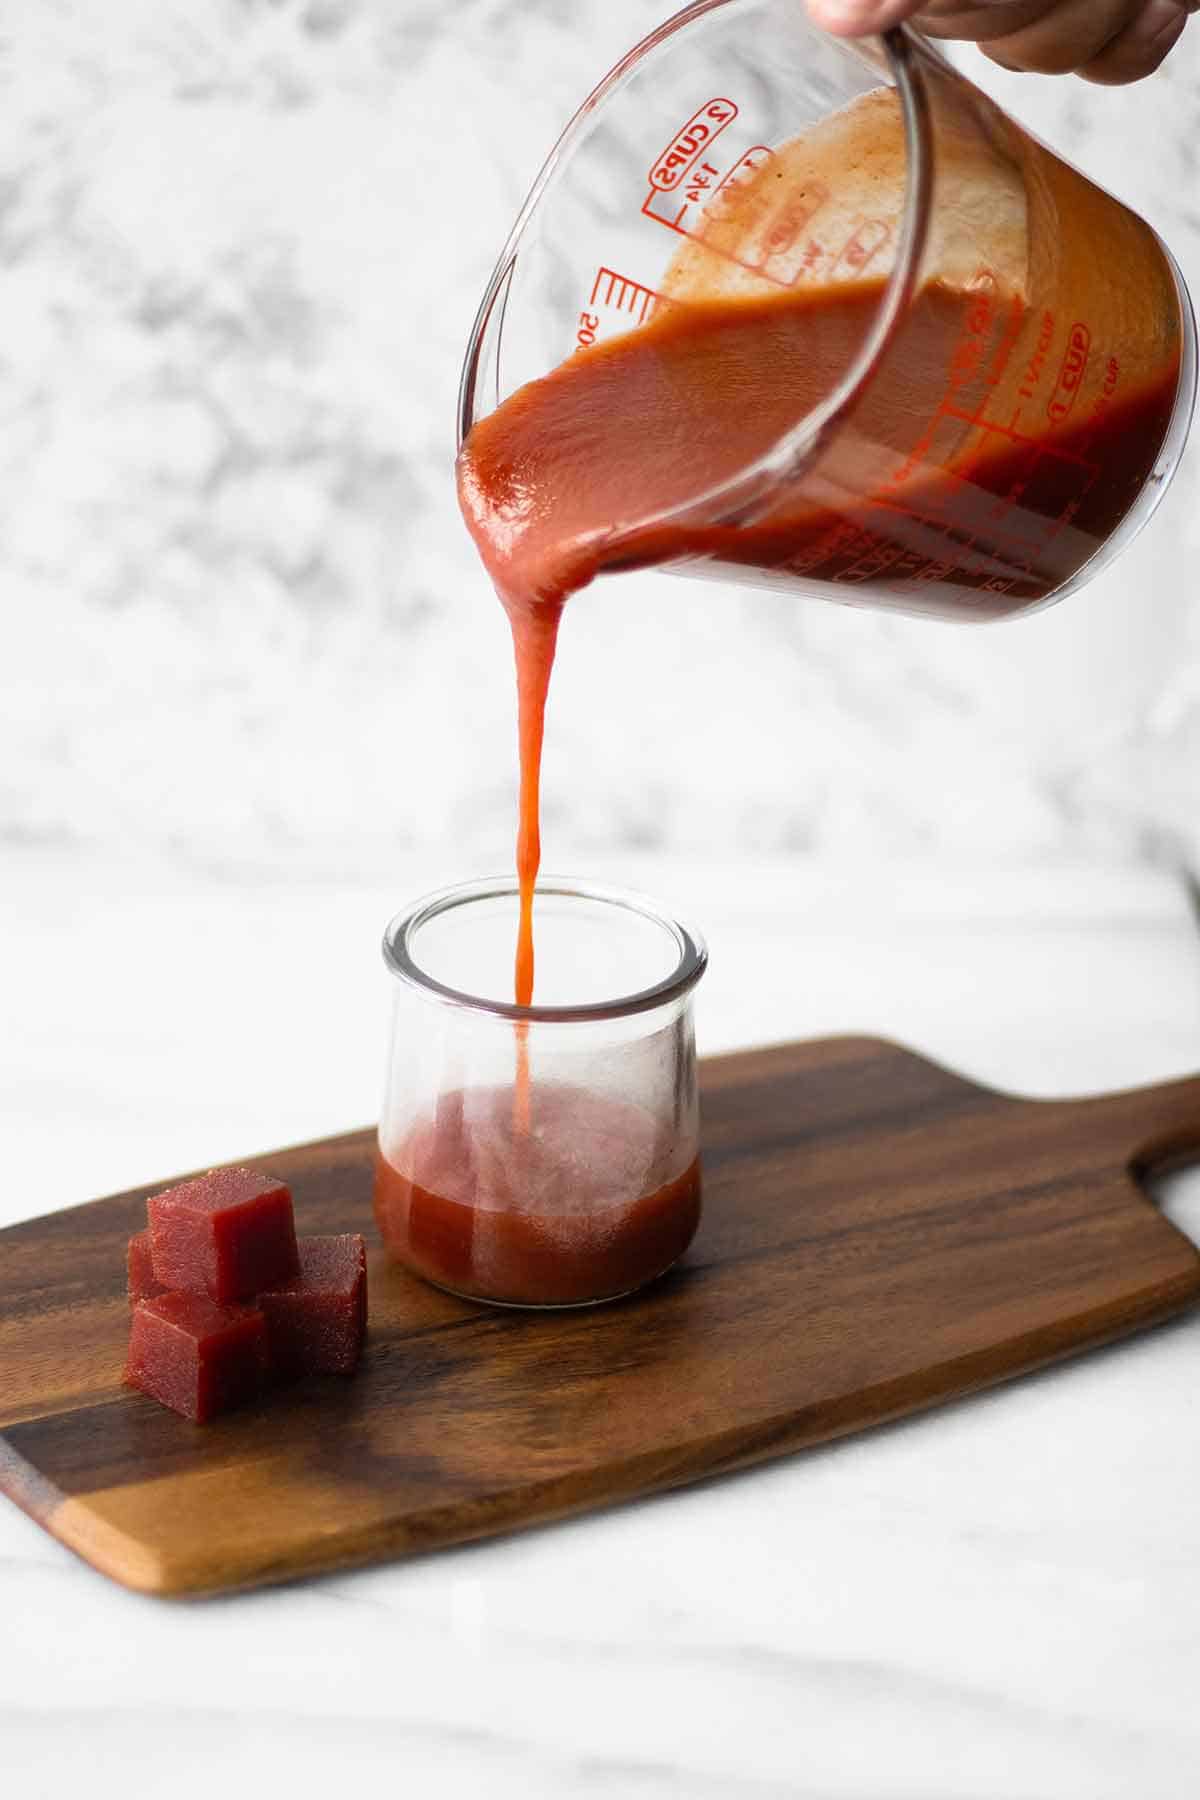 salsa de guayaba being poured into a small glass jar.